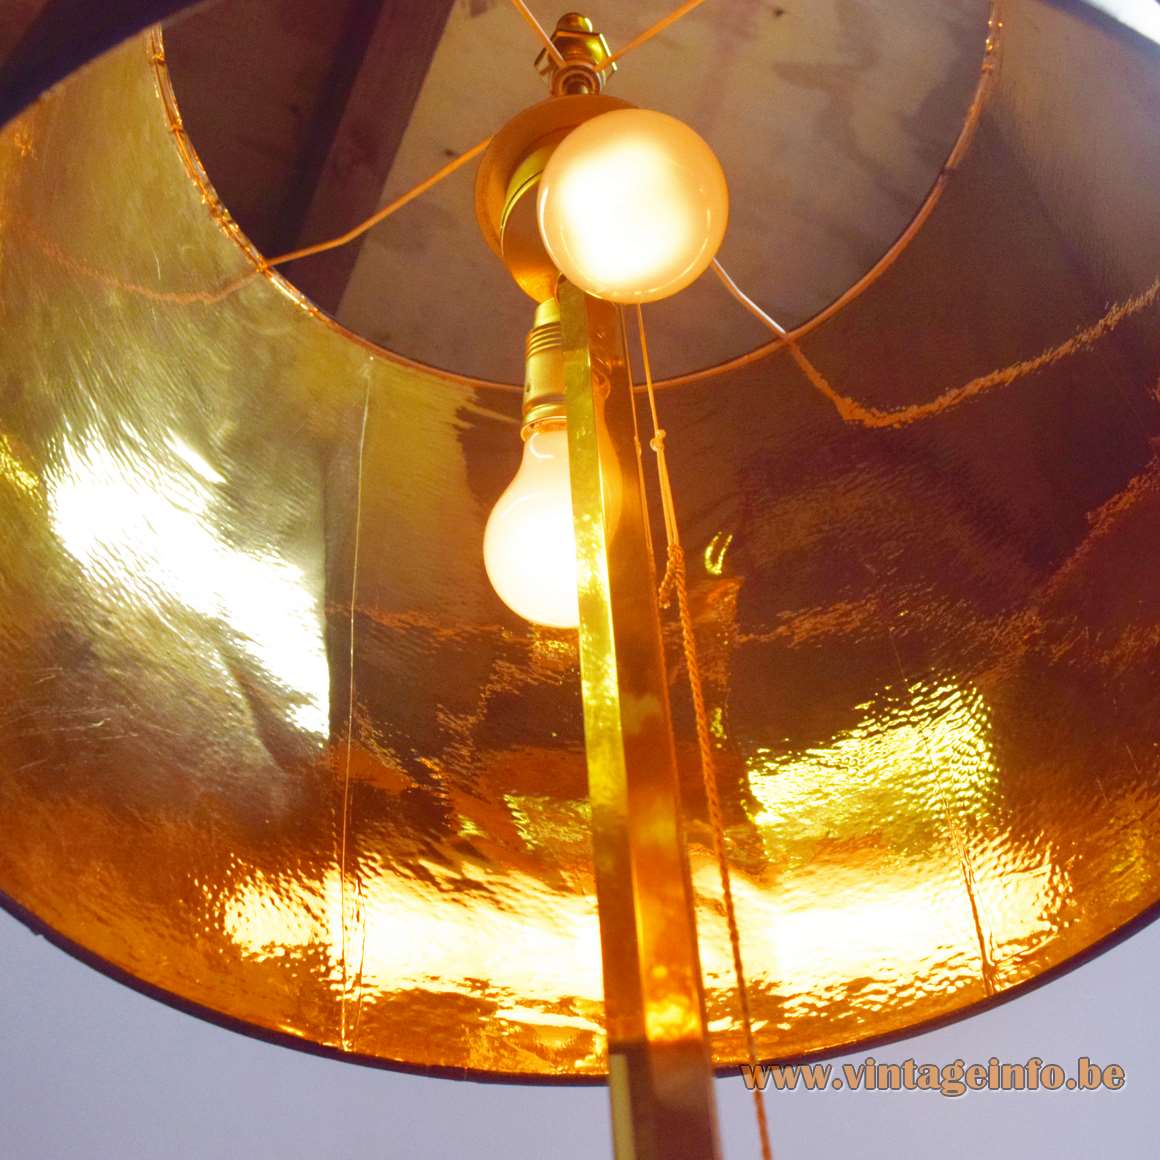 1970s classic brass floor lamp hexagonal rod square base round lampshade S.A. Boulanger Liege Belgium